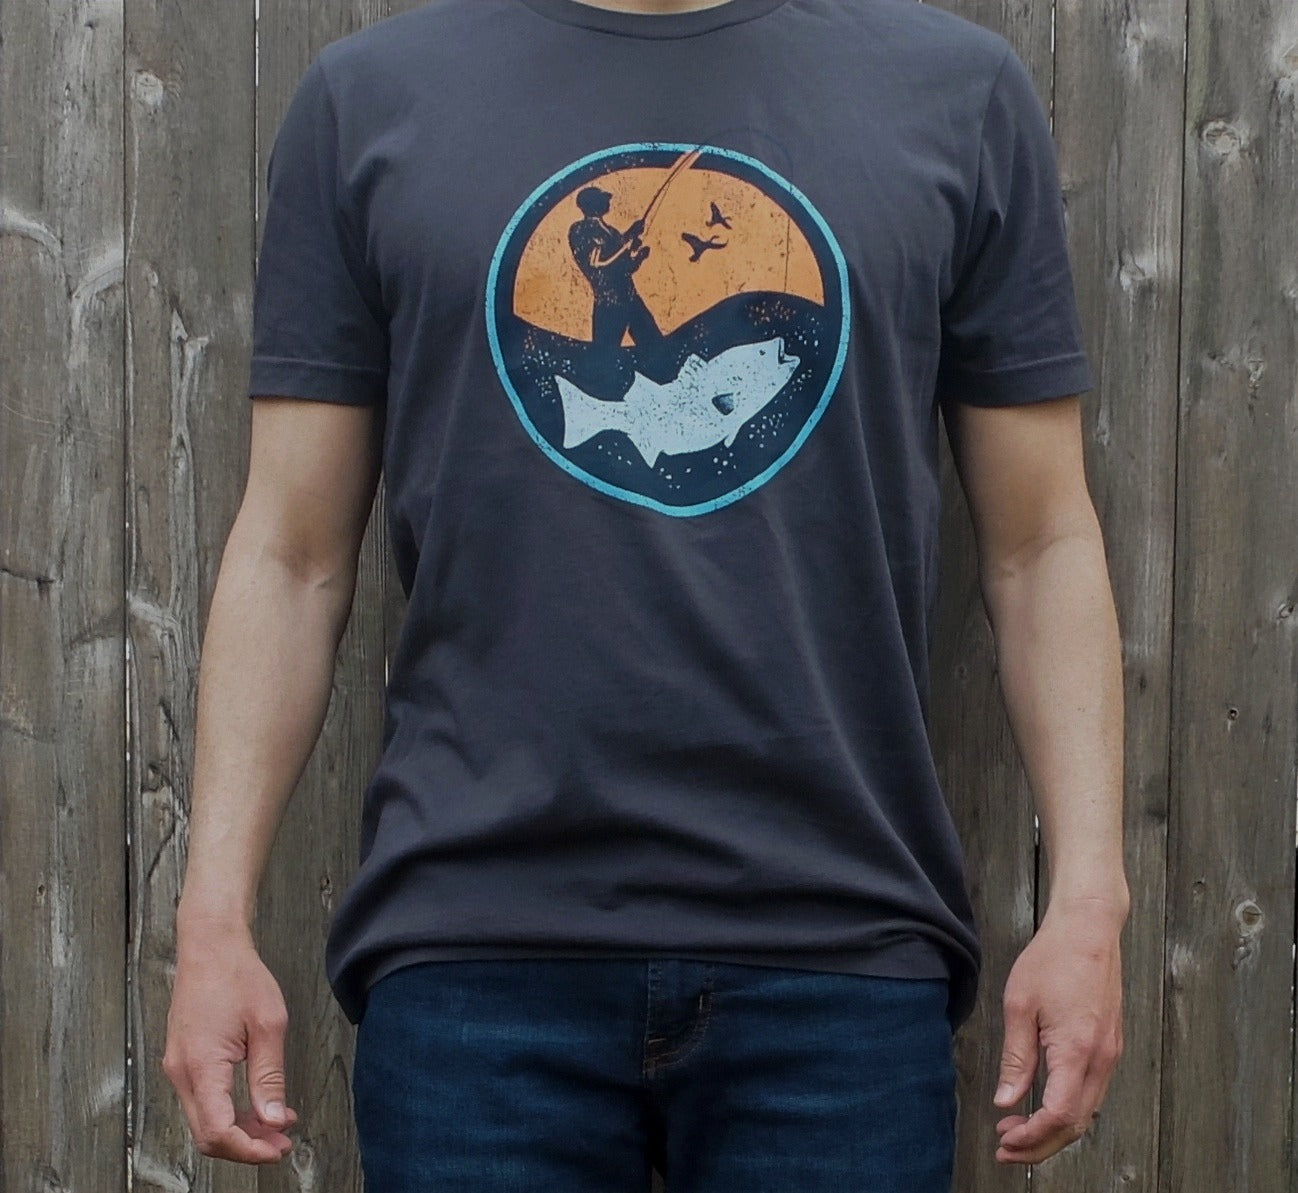 man wearing dark grey cotton t-shirt with round orange and blue surf fisherman logo